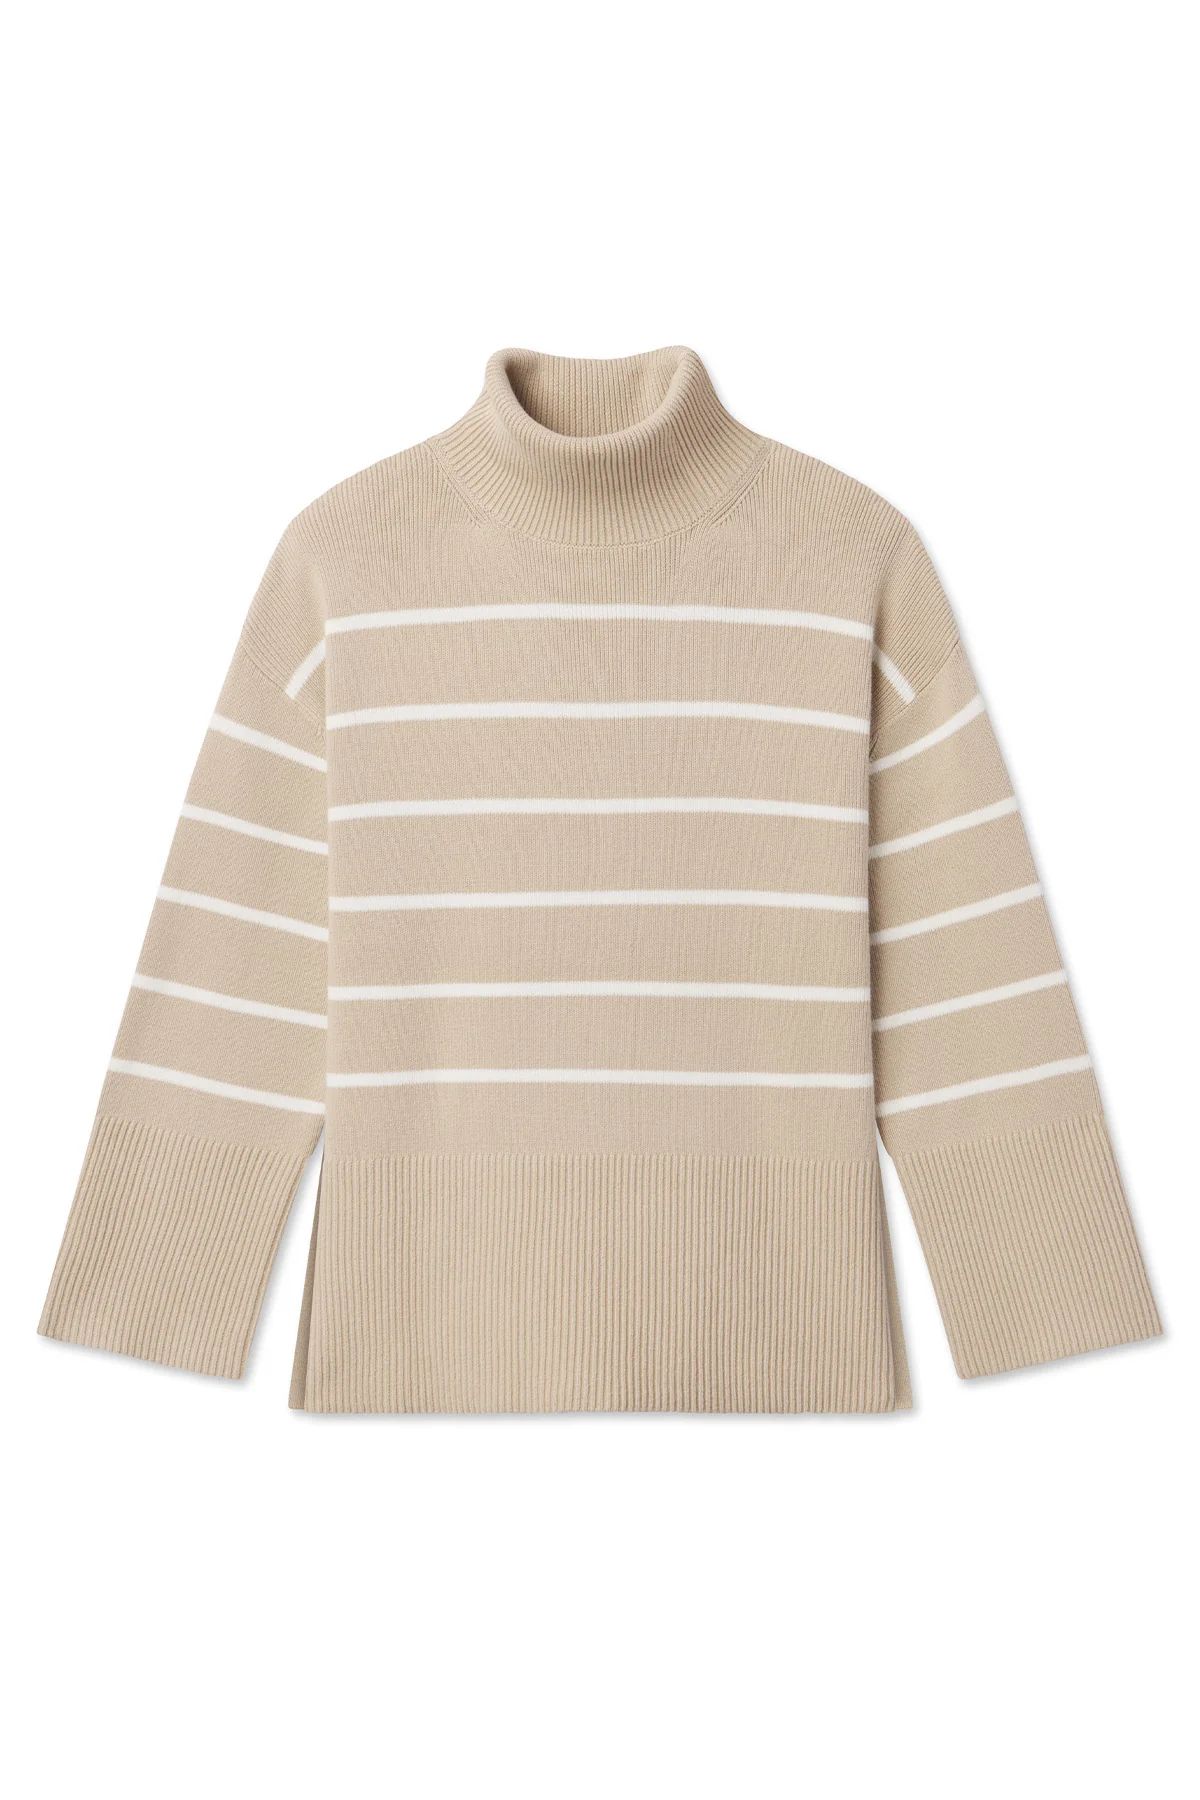 Madeline Cotton Sweater in Driftwood Ivory Stripe | Lake Pajamas